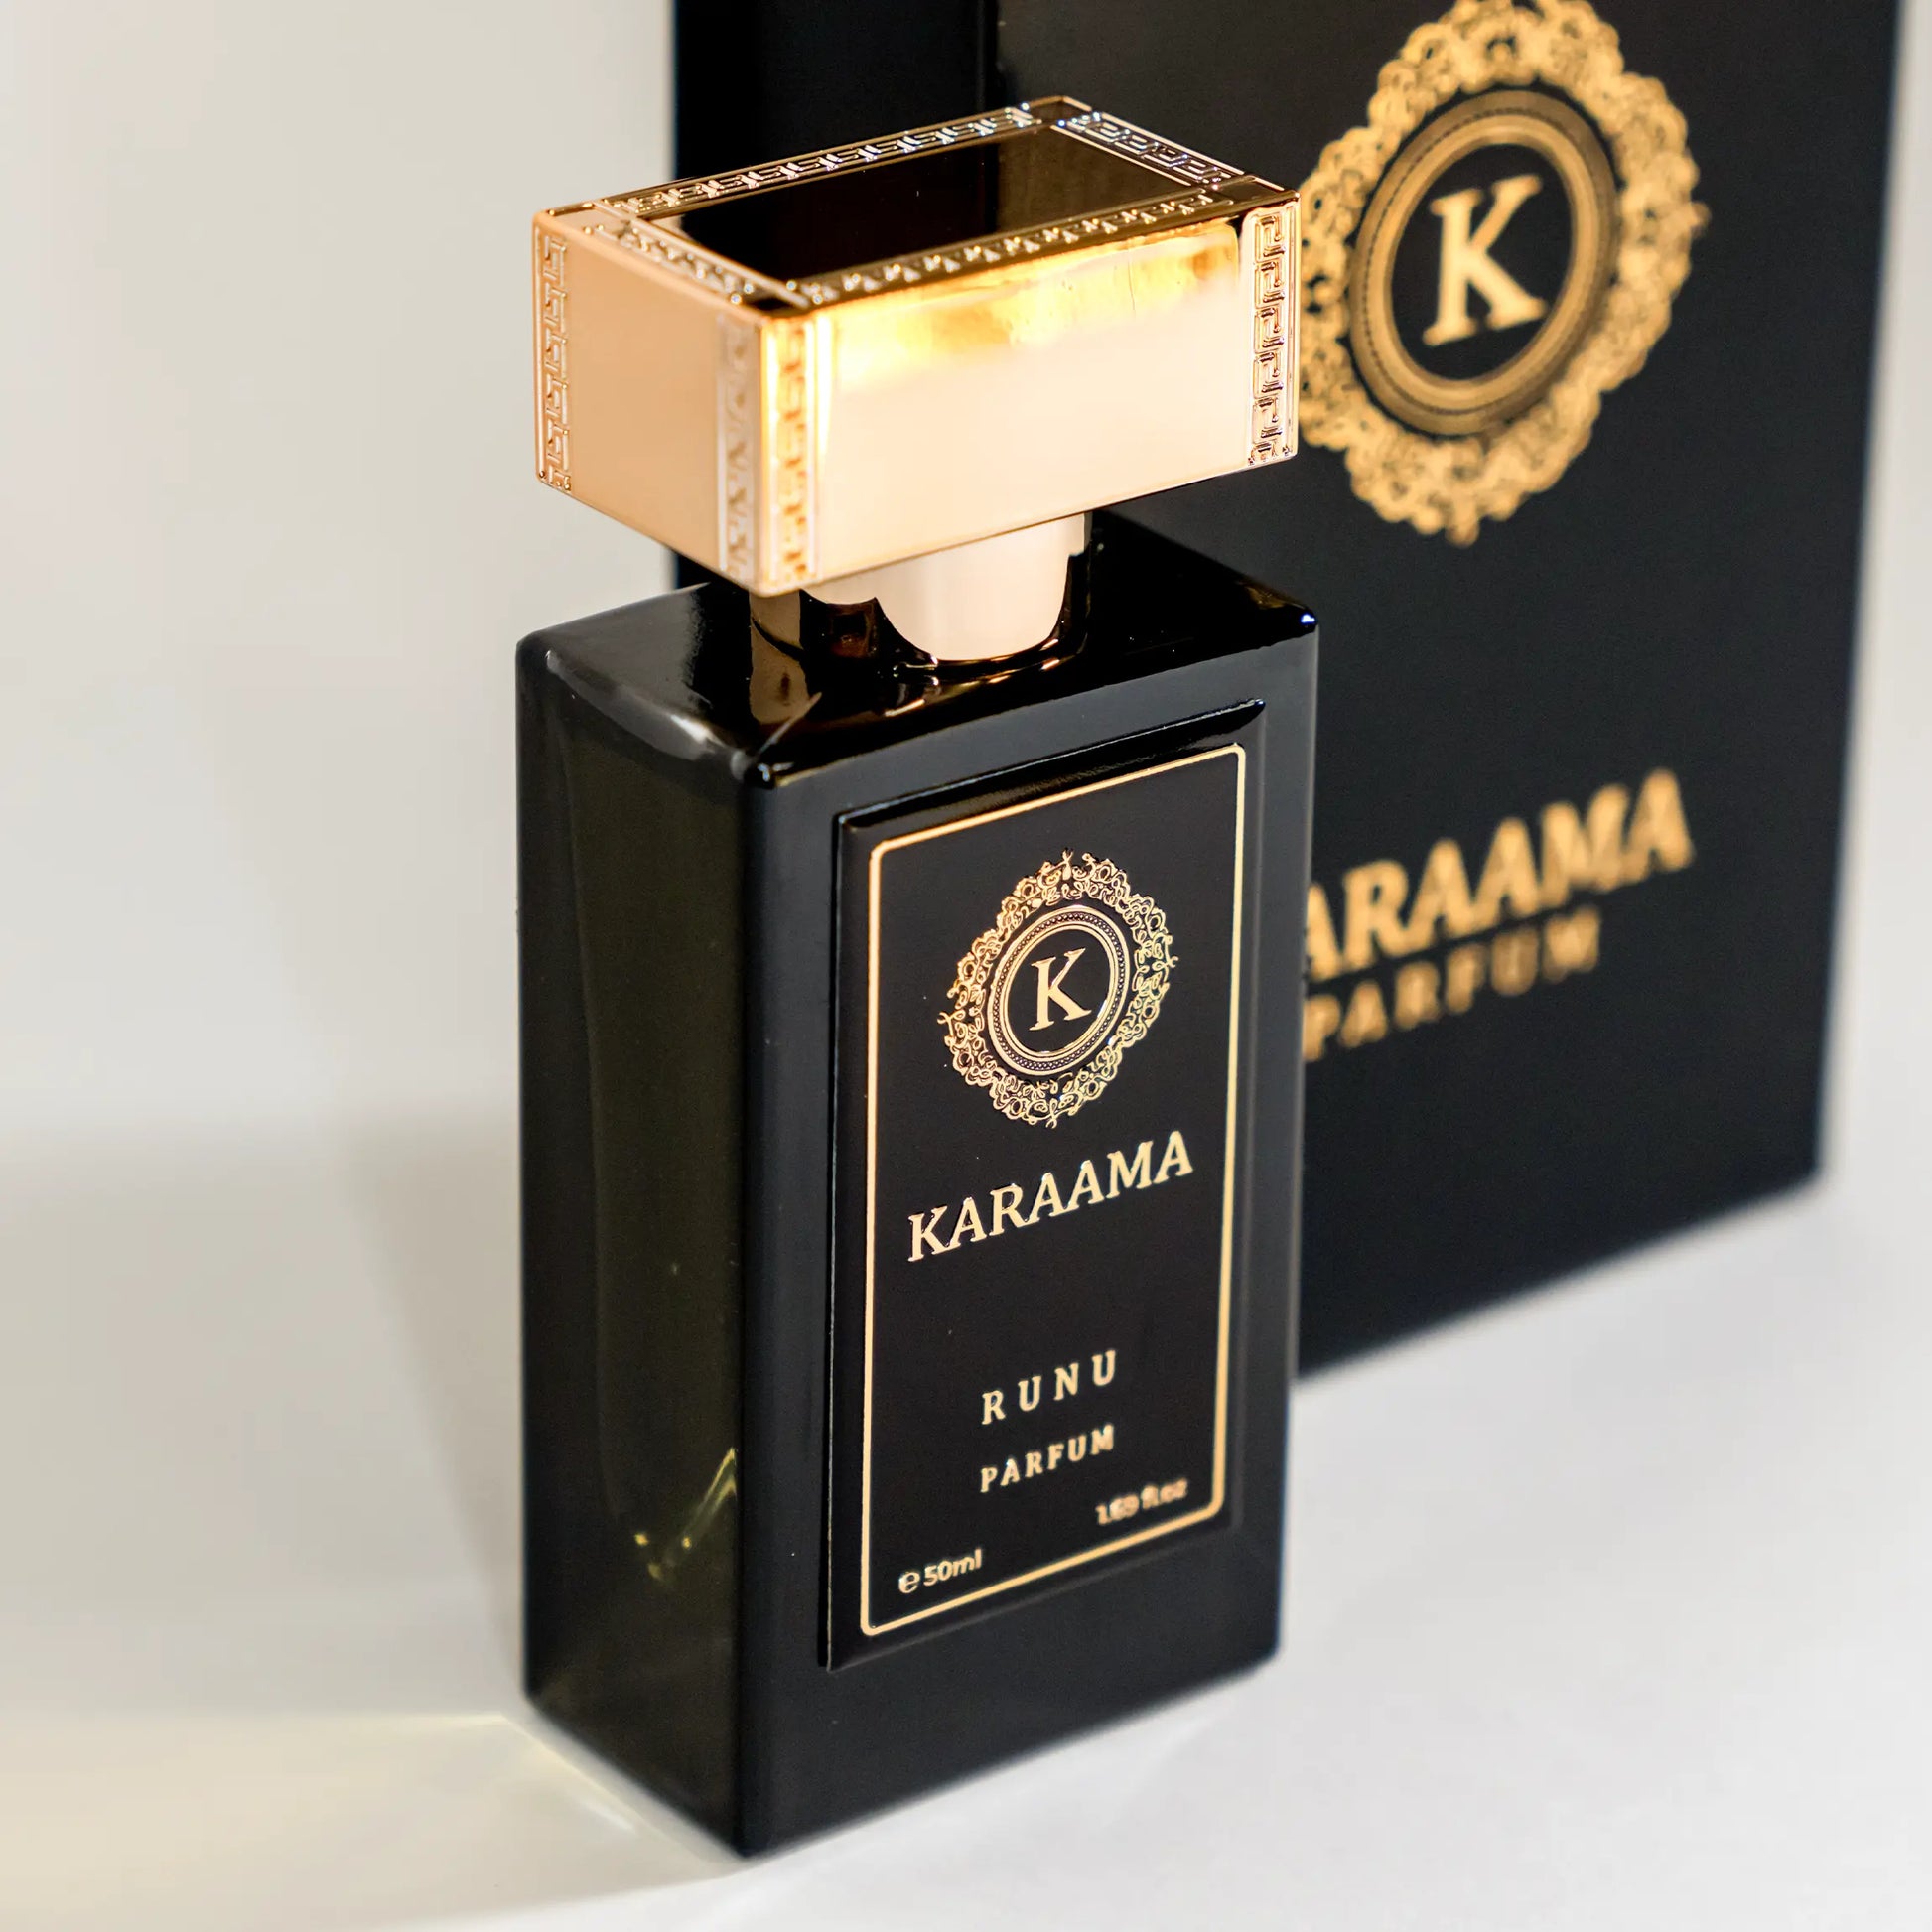 A bottle of Karaama Runu Parfum with a gold lid on a white table. The bottle is 50ml or 1.69 fl oz. [karaama.com]